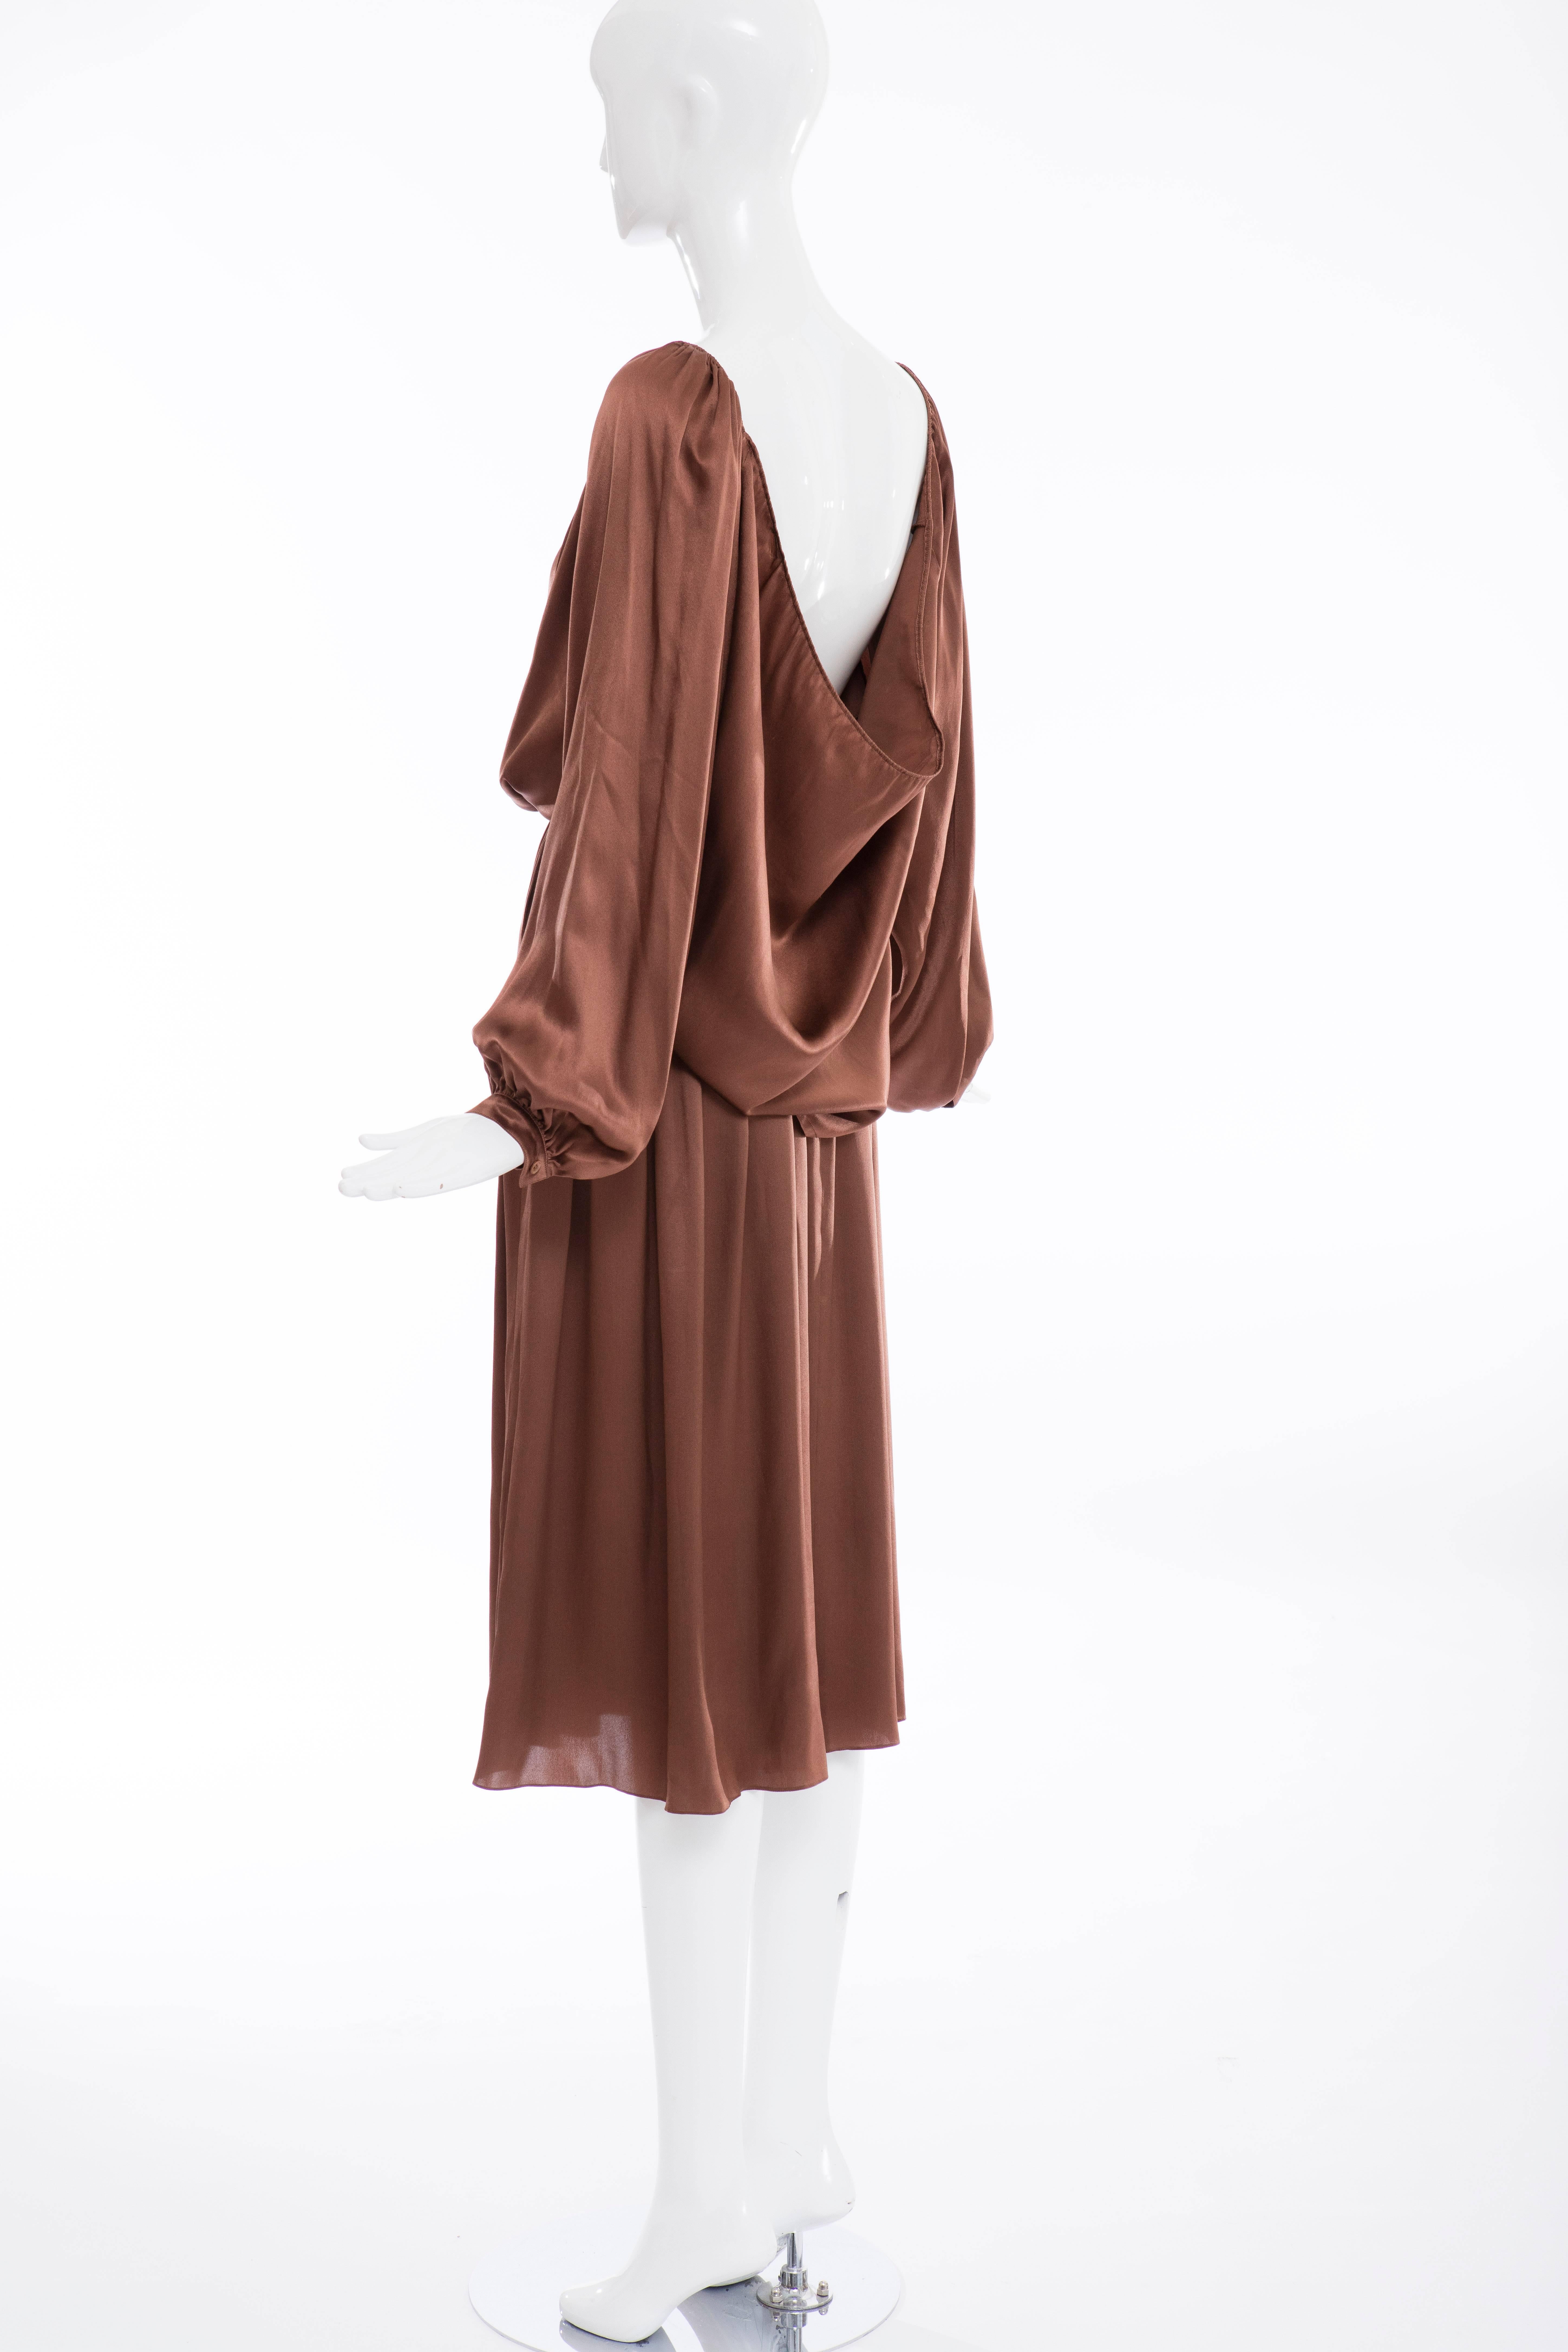 Calvin Klein Chocolate Brown Silk Charmeuse Skirt Suit, Circa 1970's For Sale 2